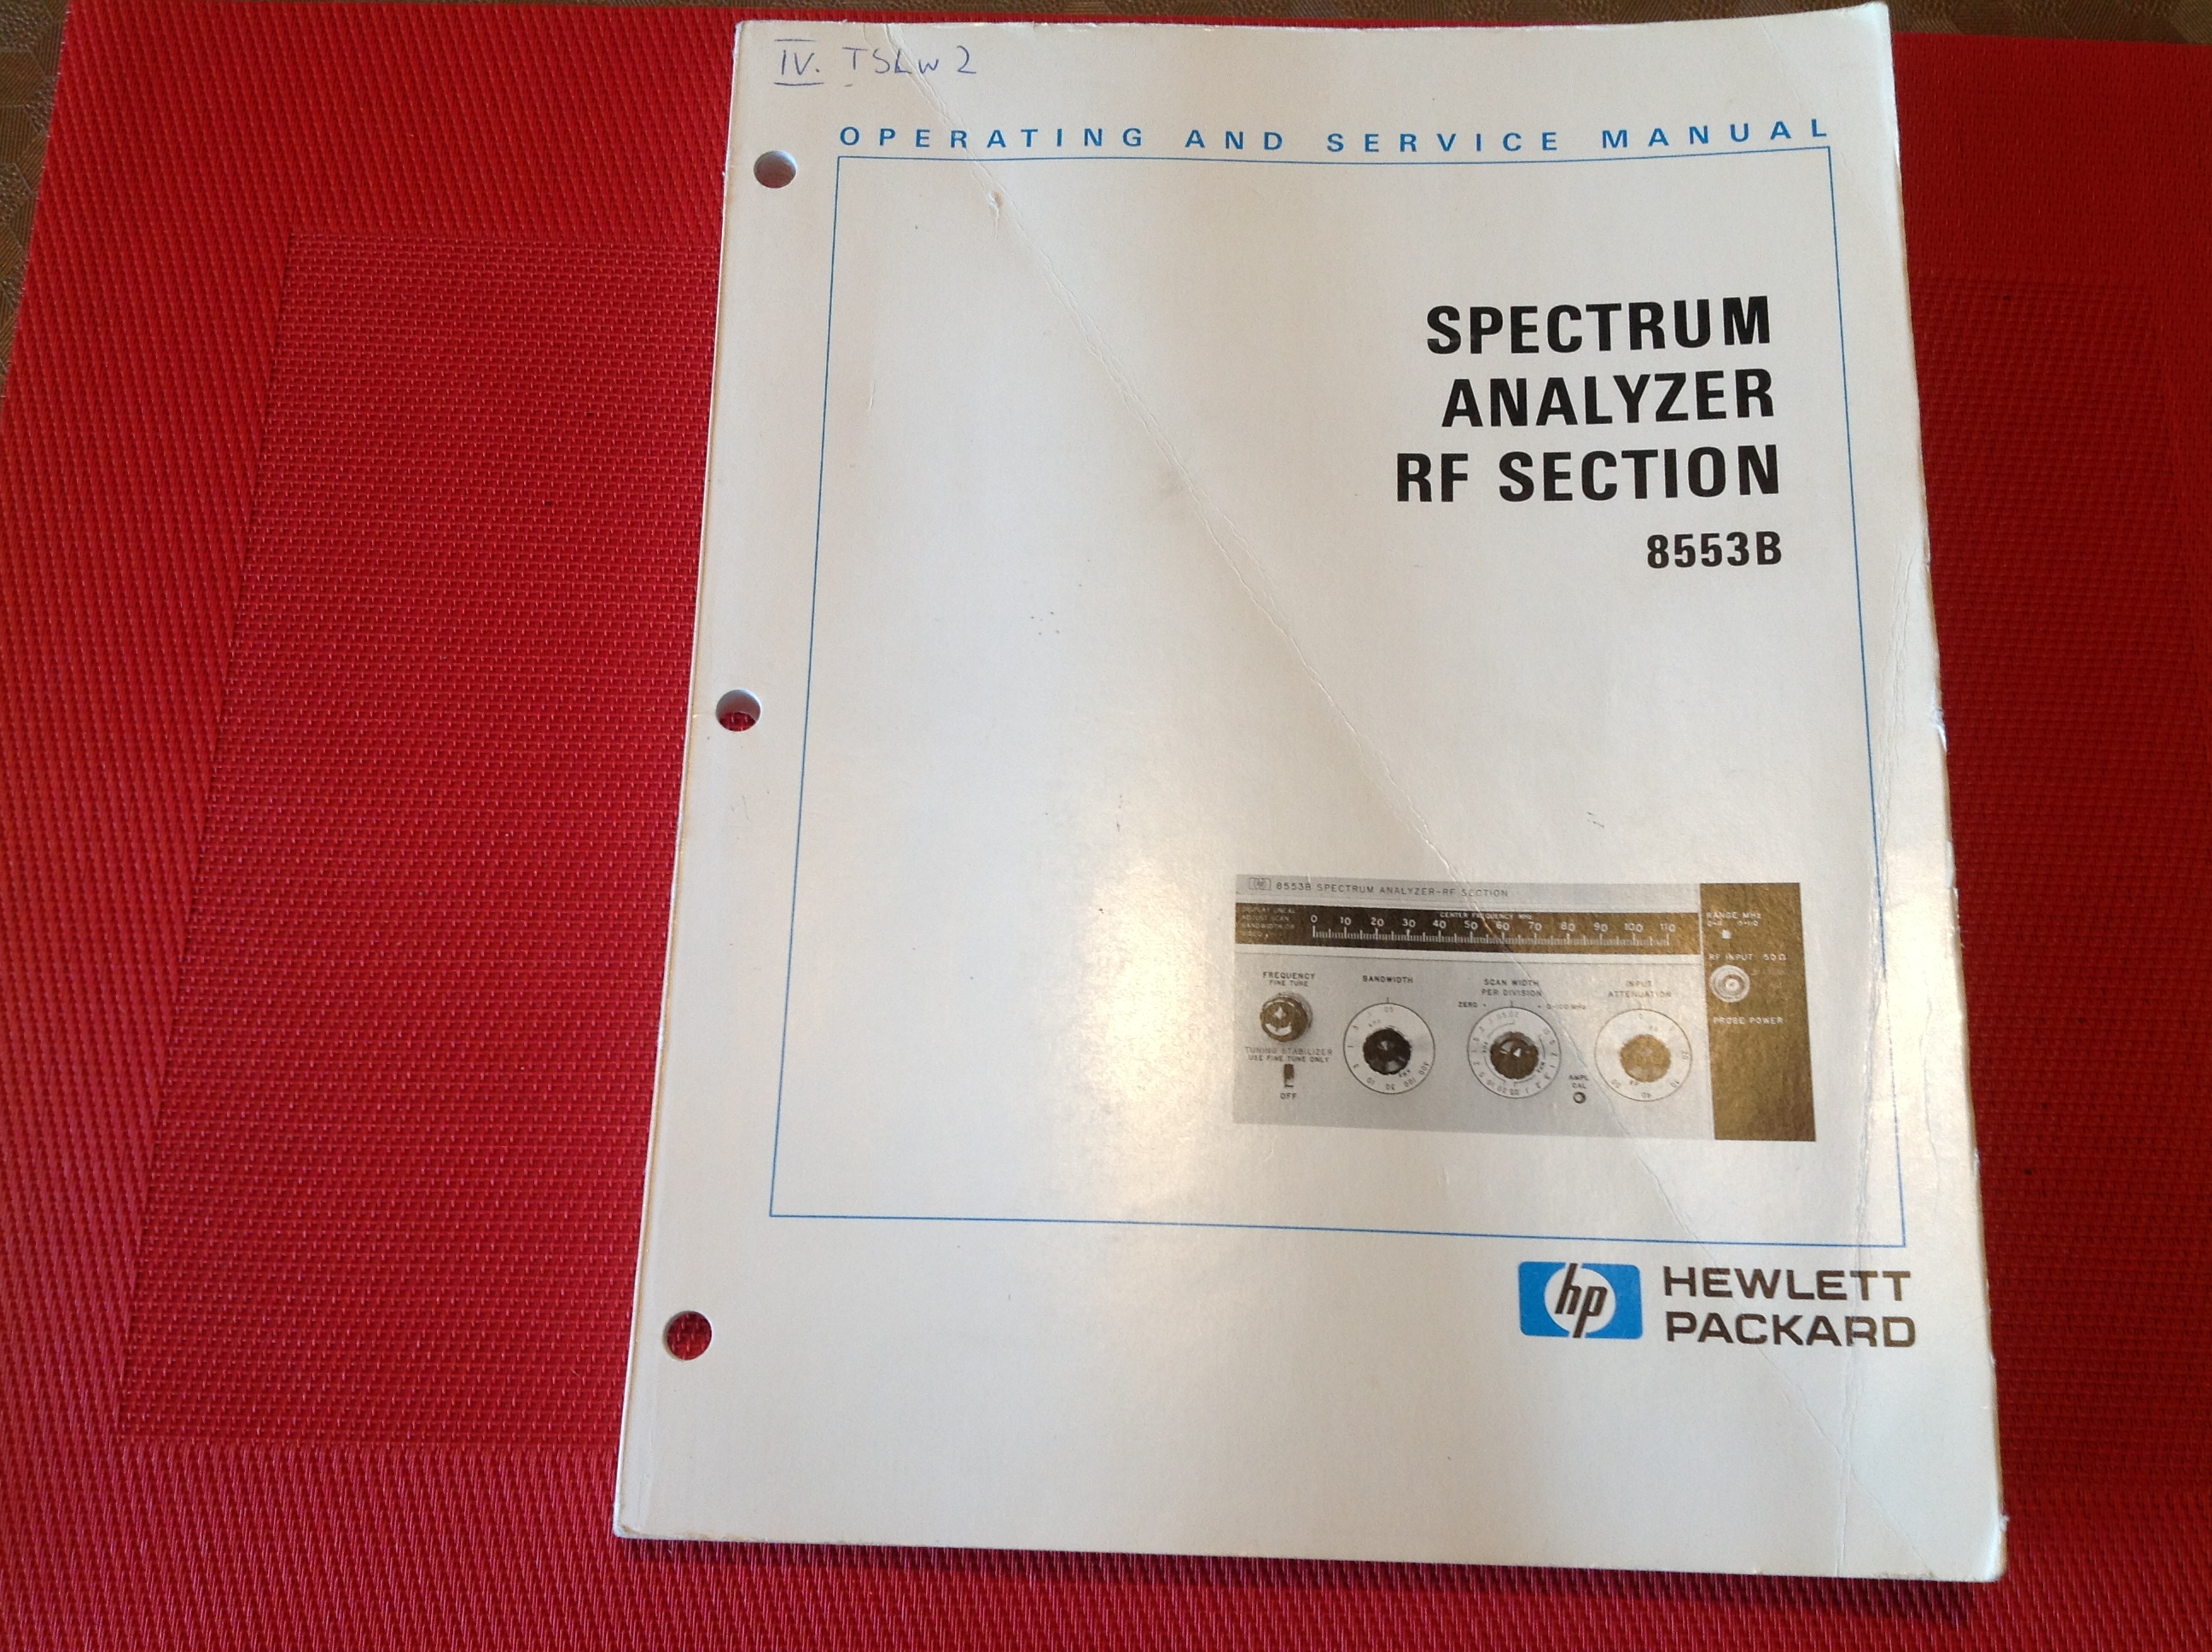 Hewlett Packard Spectrum Analyser RF-Section 8553B